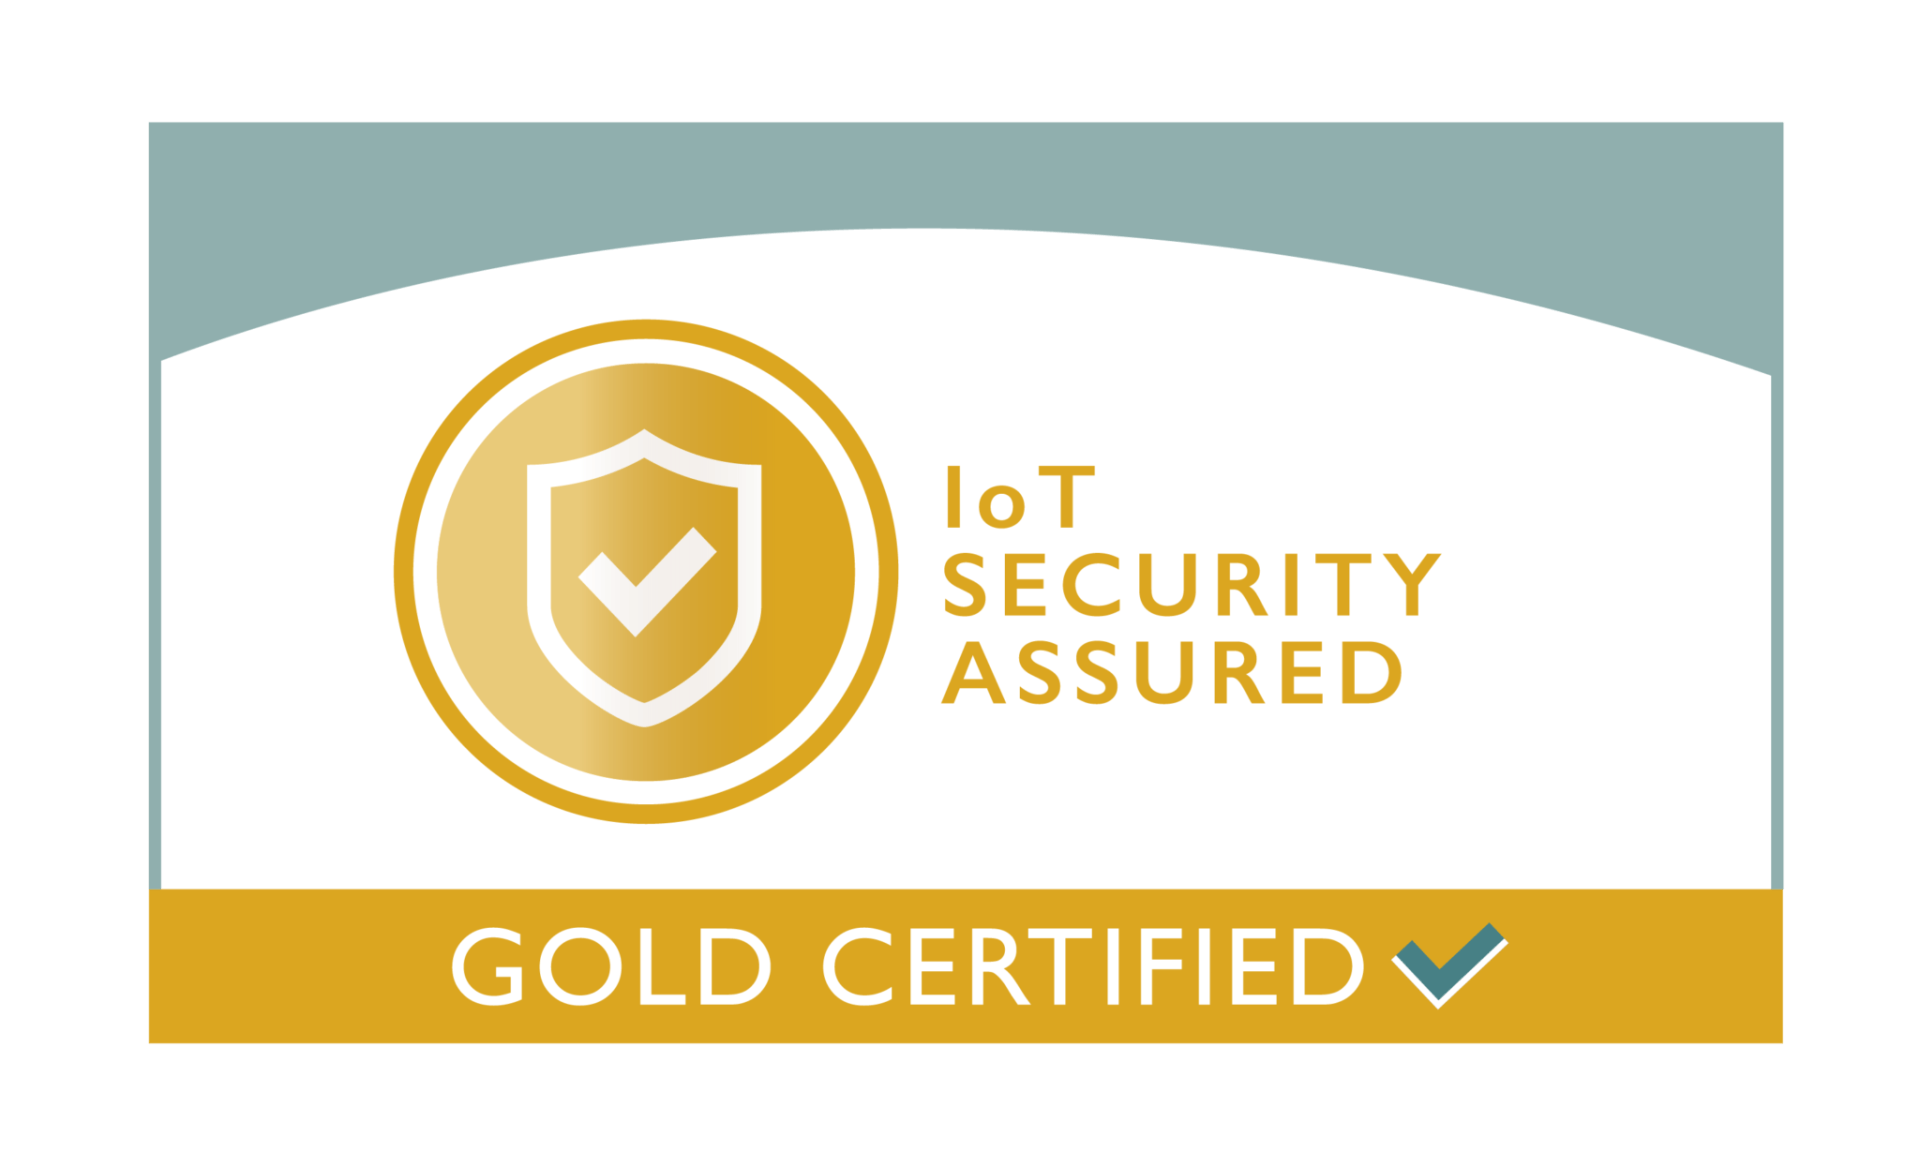 IoT Security Assured GOLD